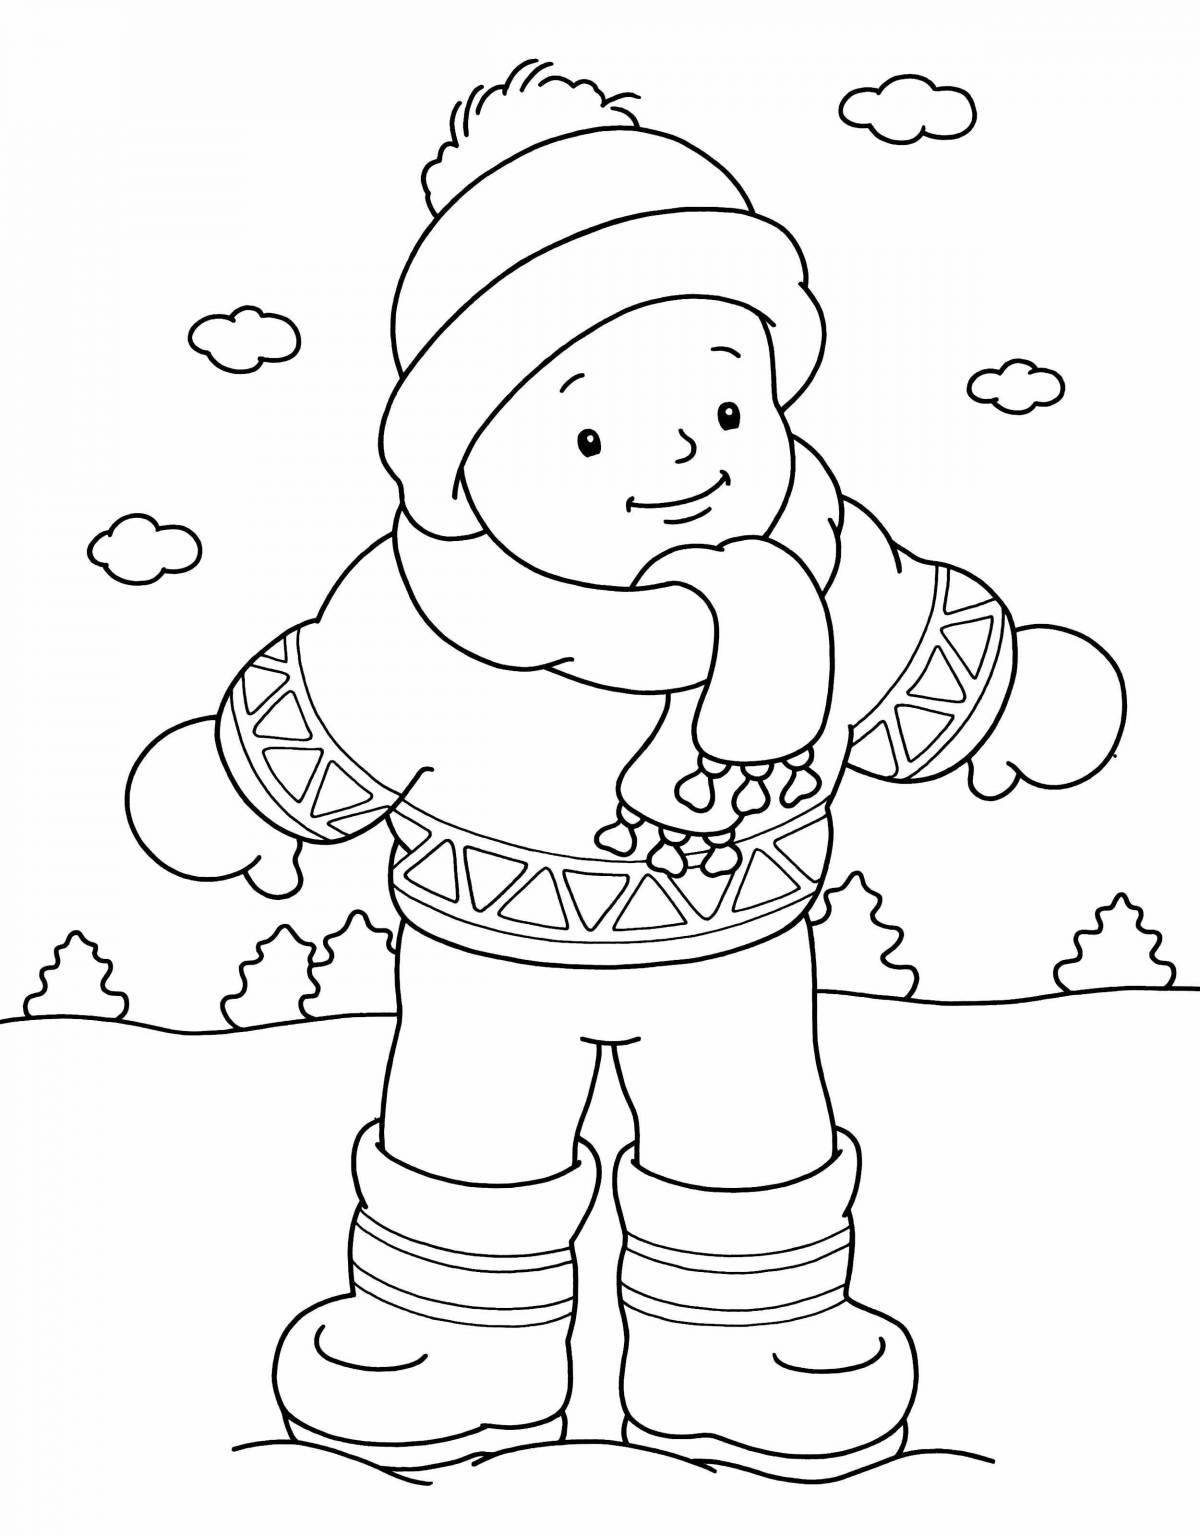 Snuggly coloring page детская зимняя одежда